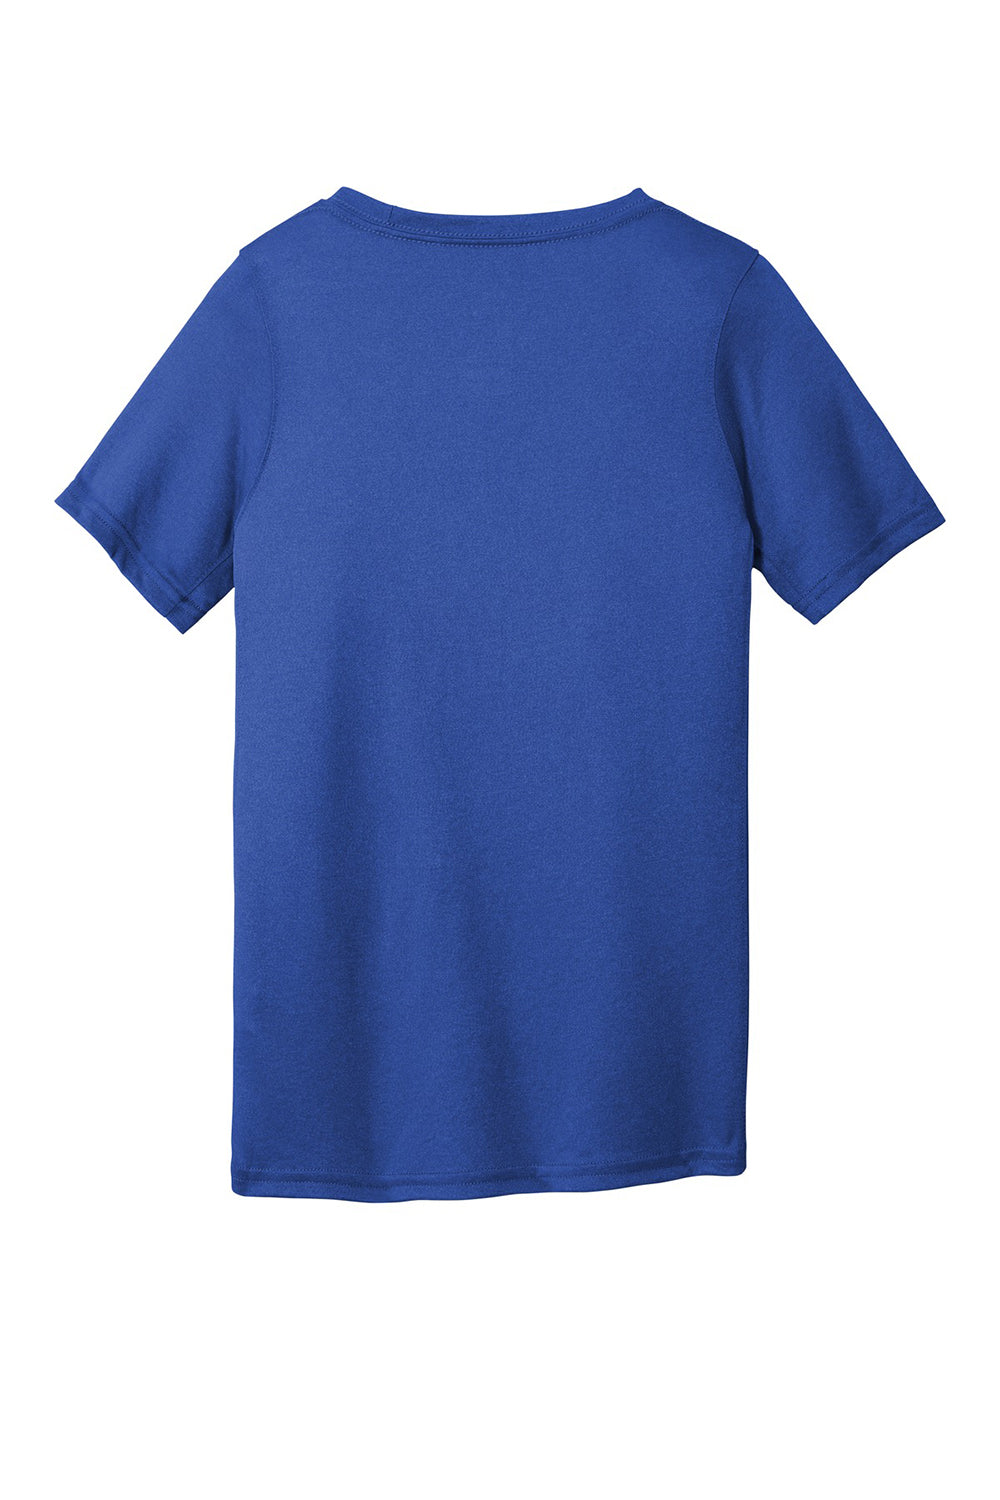 Nike 840178 Youth Legend Dri-Fit Moisture Wicking Short Sleeve Crewneck T-Shirt Game Royal Blue Flat Back